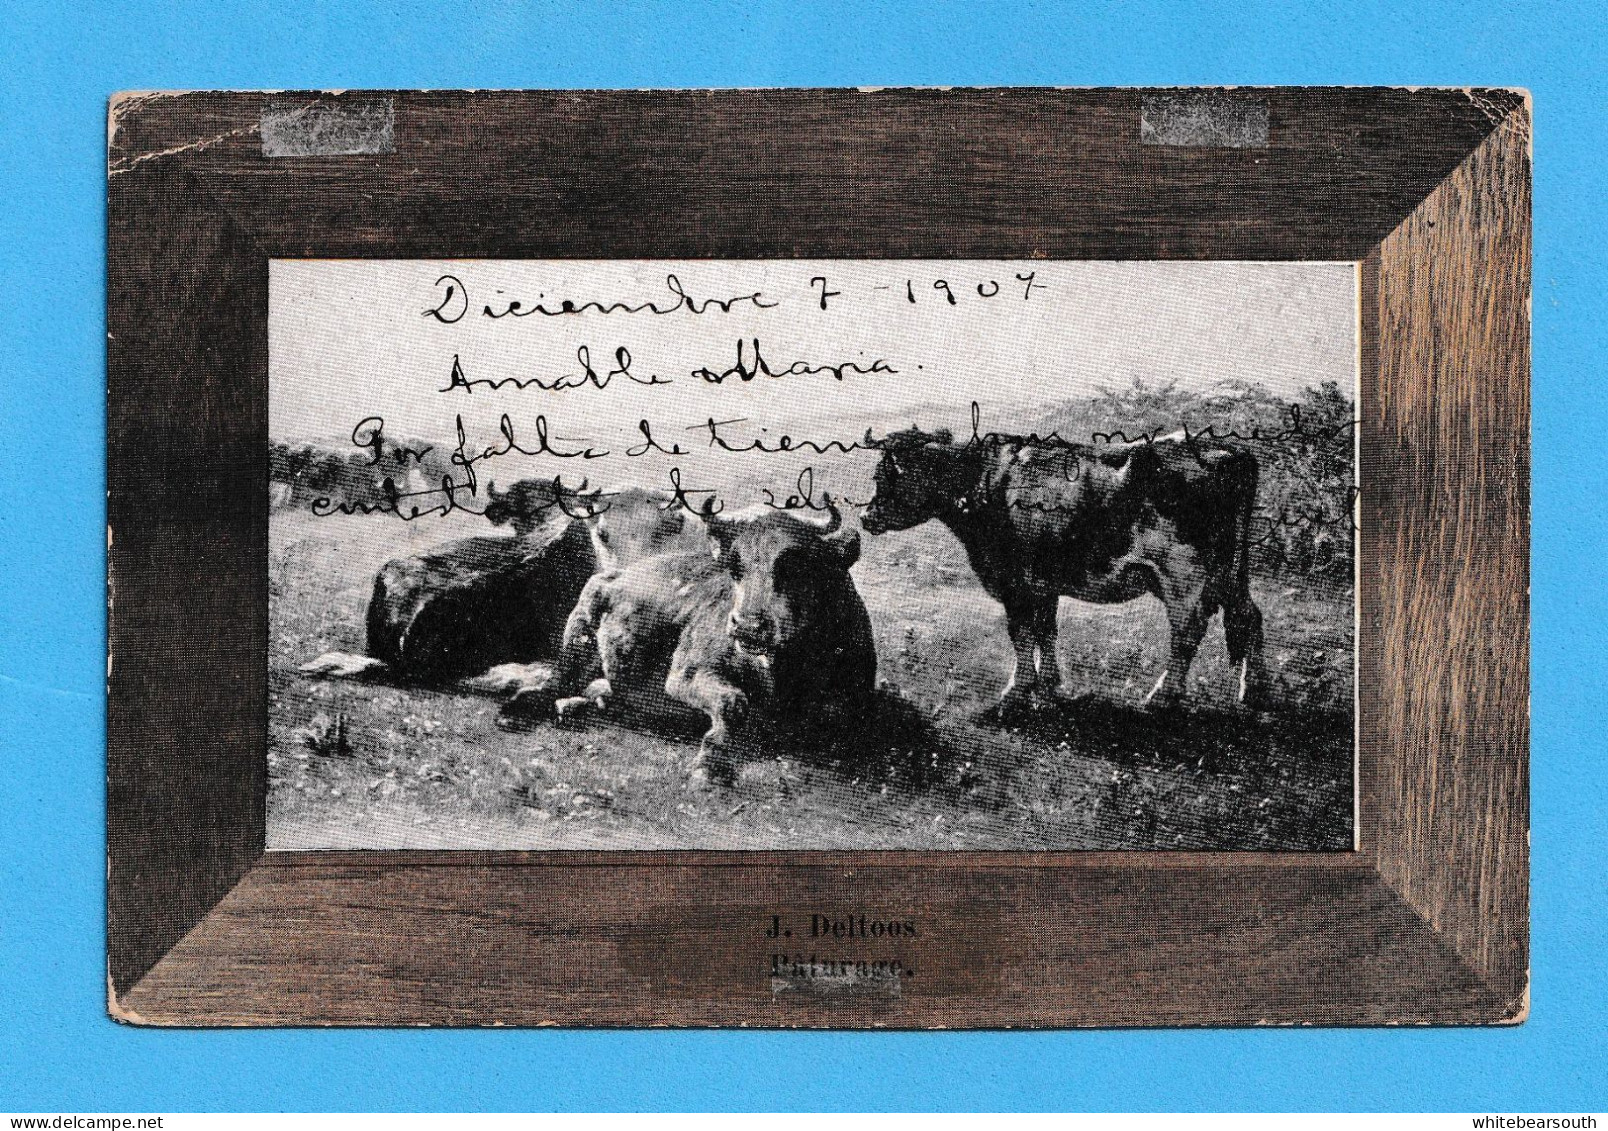 460 - FRANCE FARM CAMPO J. DELTOOS PATORAGE PASTOREO TORO COW VACA GANADO  RARE  POSTCARD - Bull